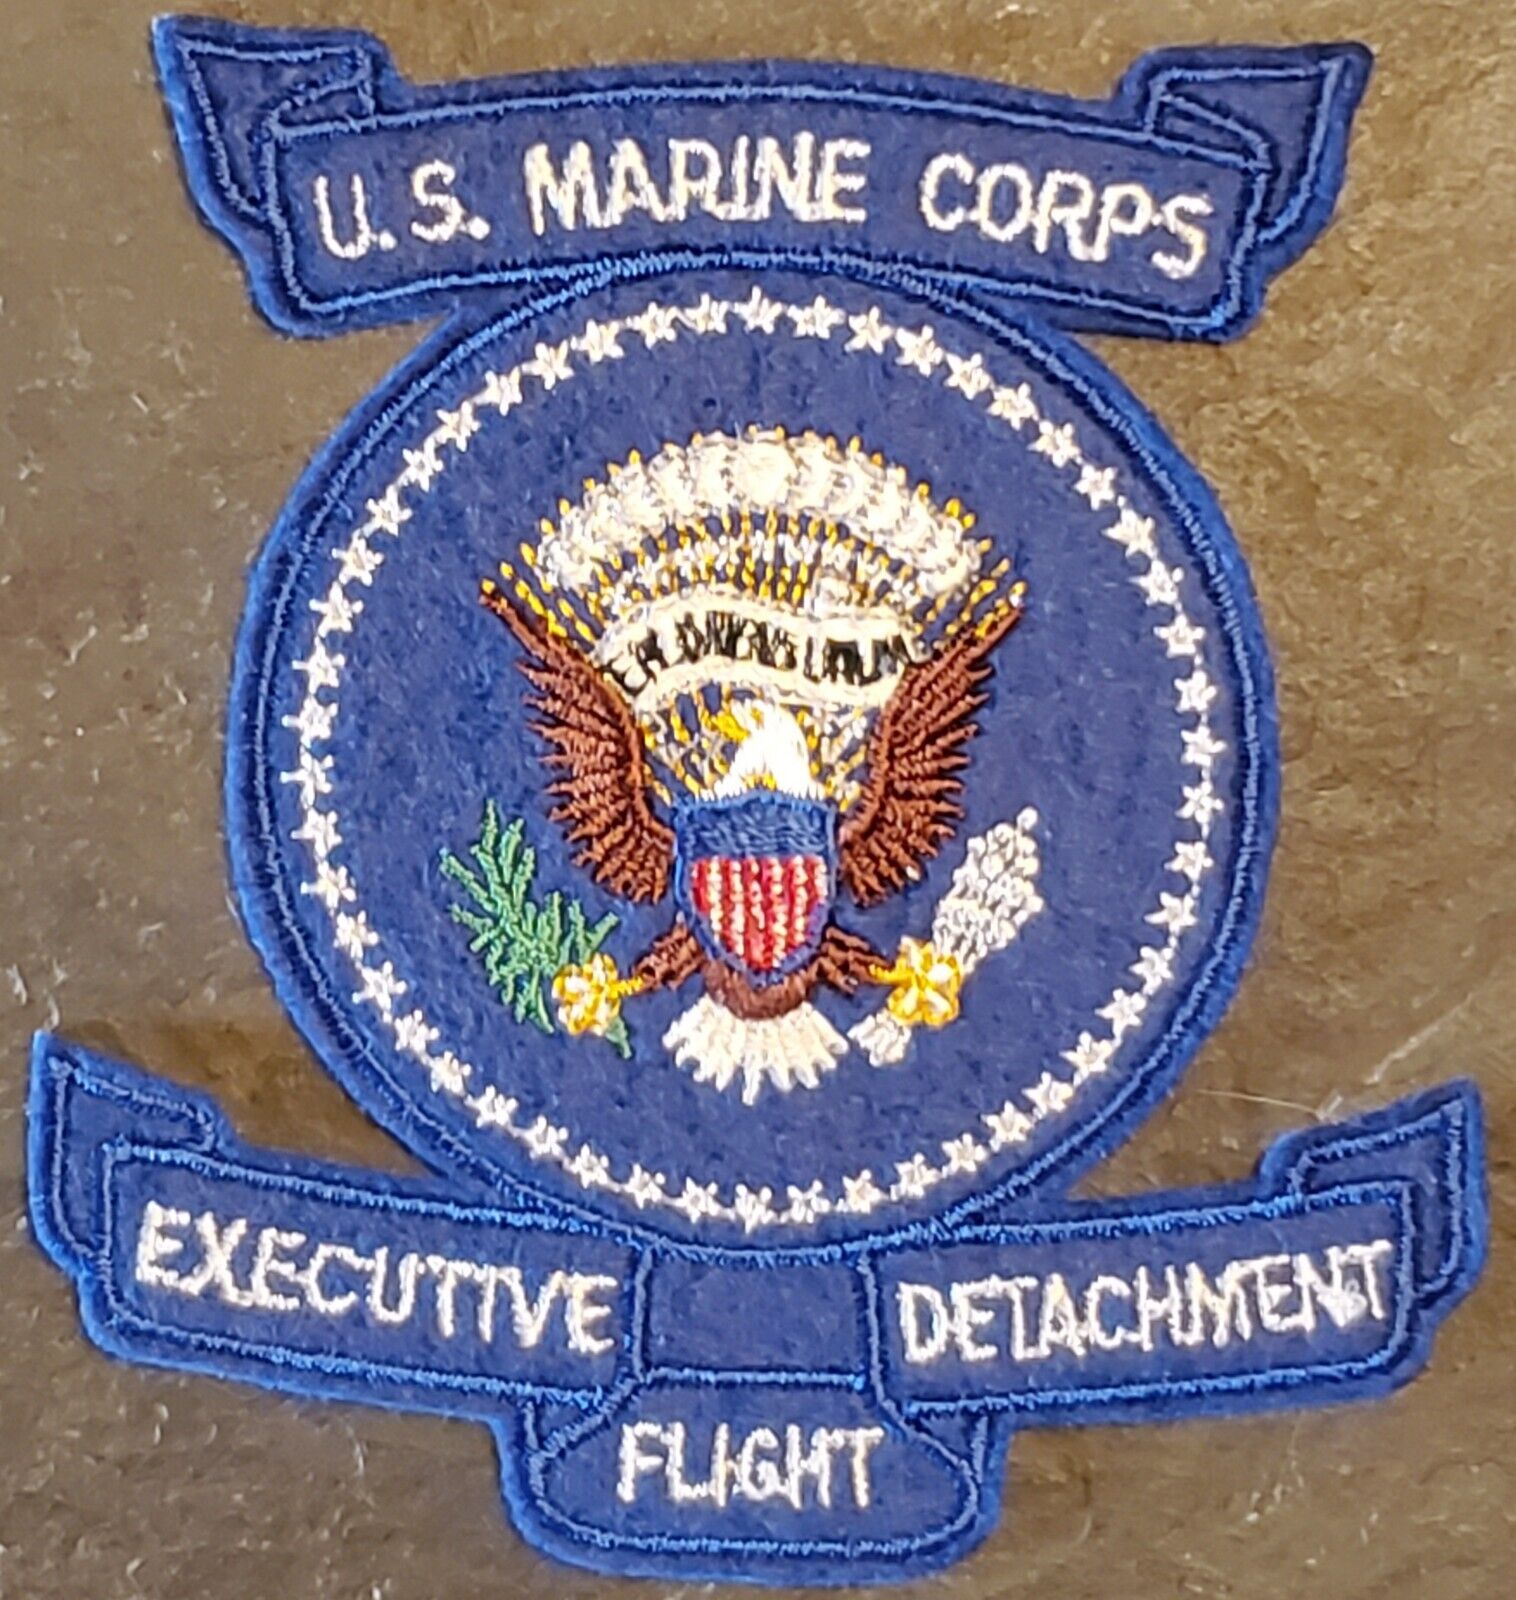 1970s White House USMC Marine Corps Executive Flight Detachment LG Jacket PATCH